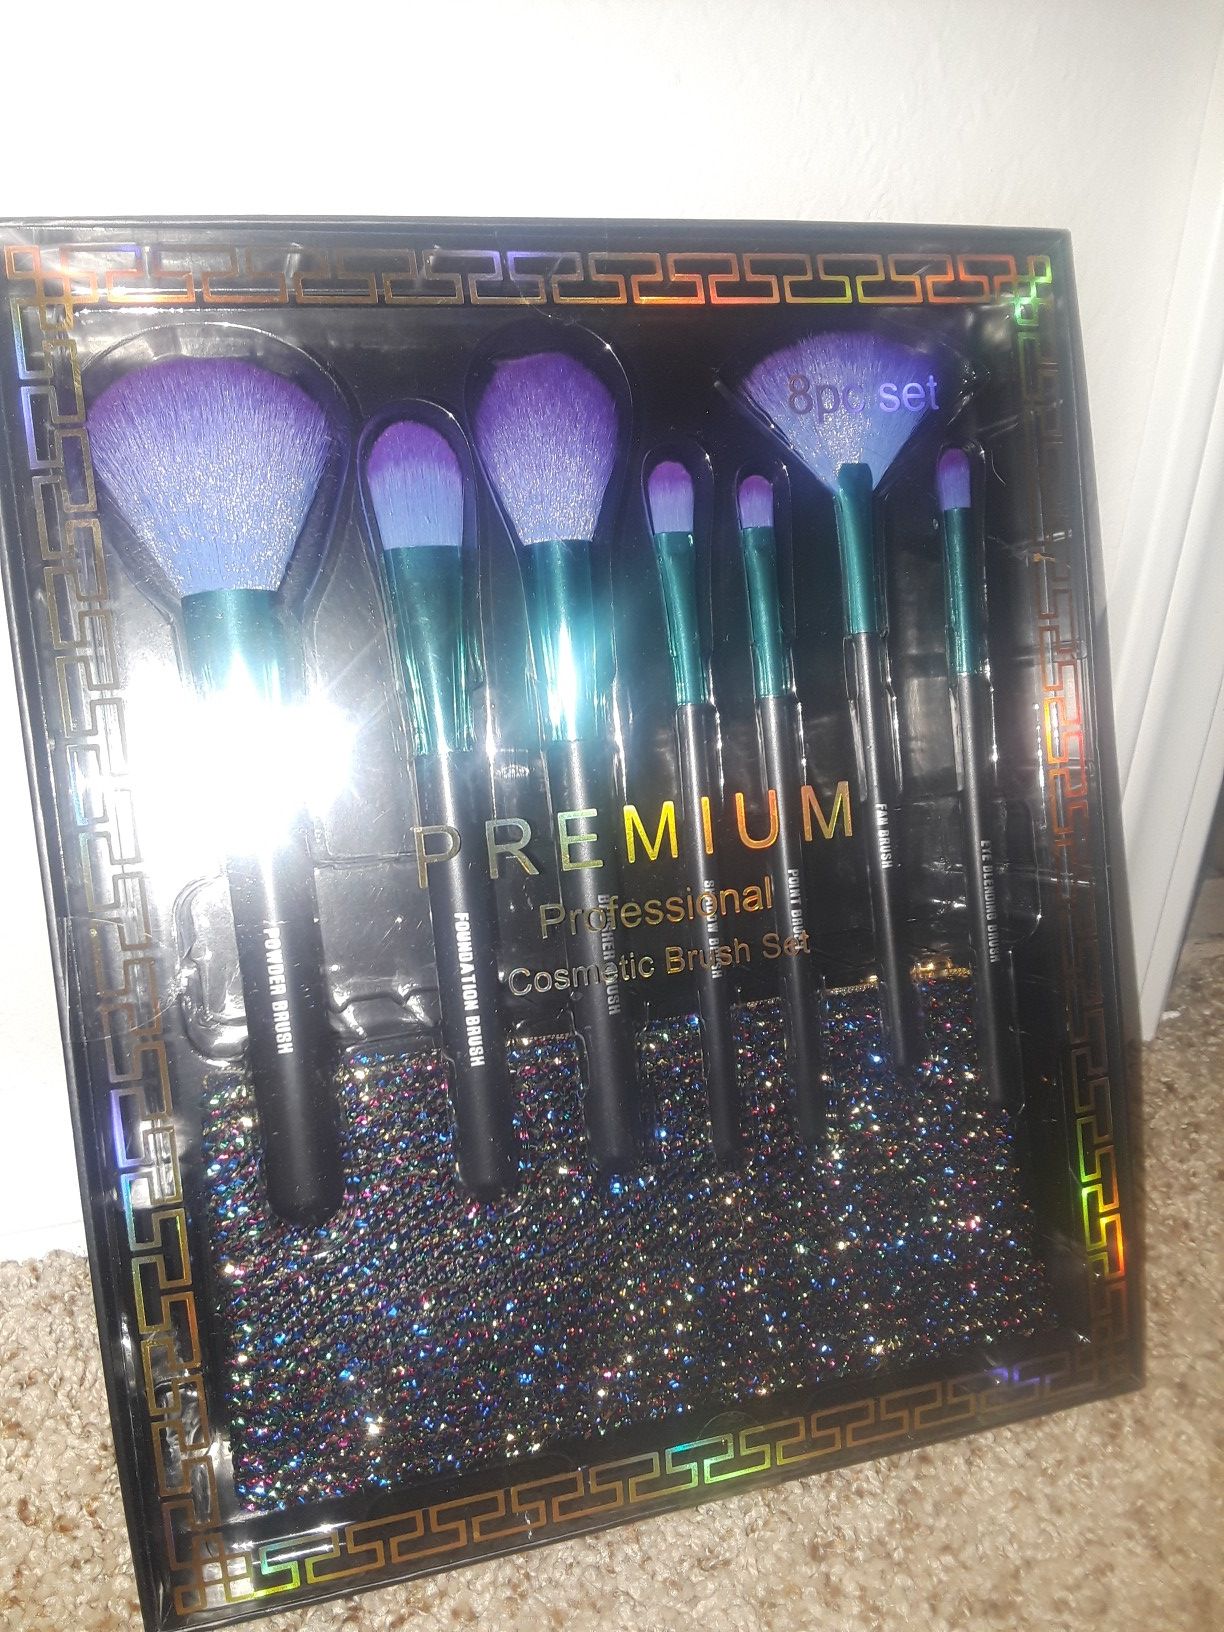 Premium professional cosmetic makeup brush set kit 8 piece brand new!